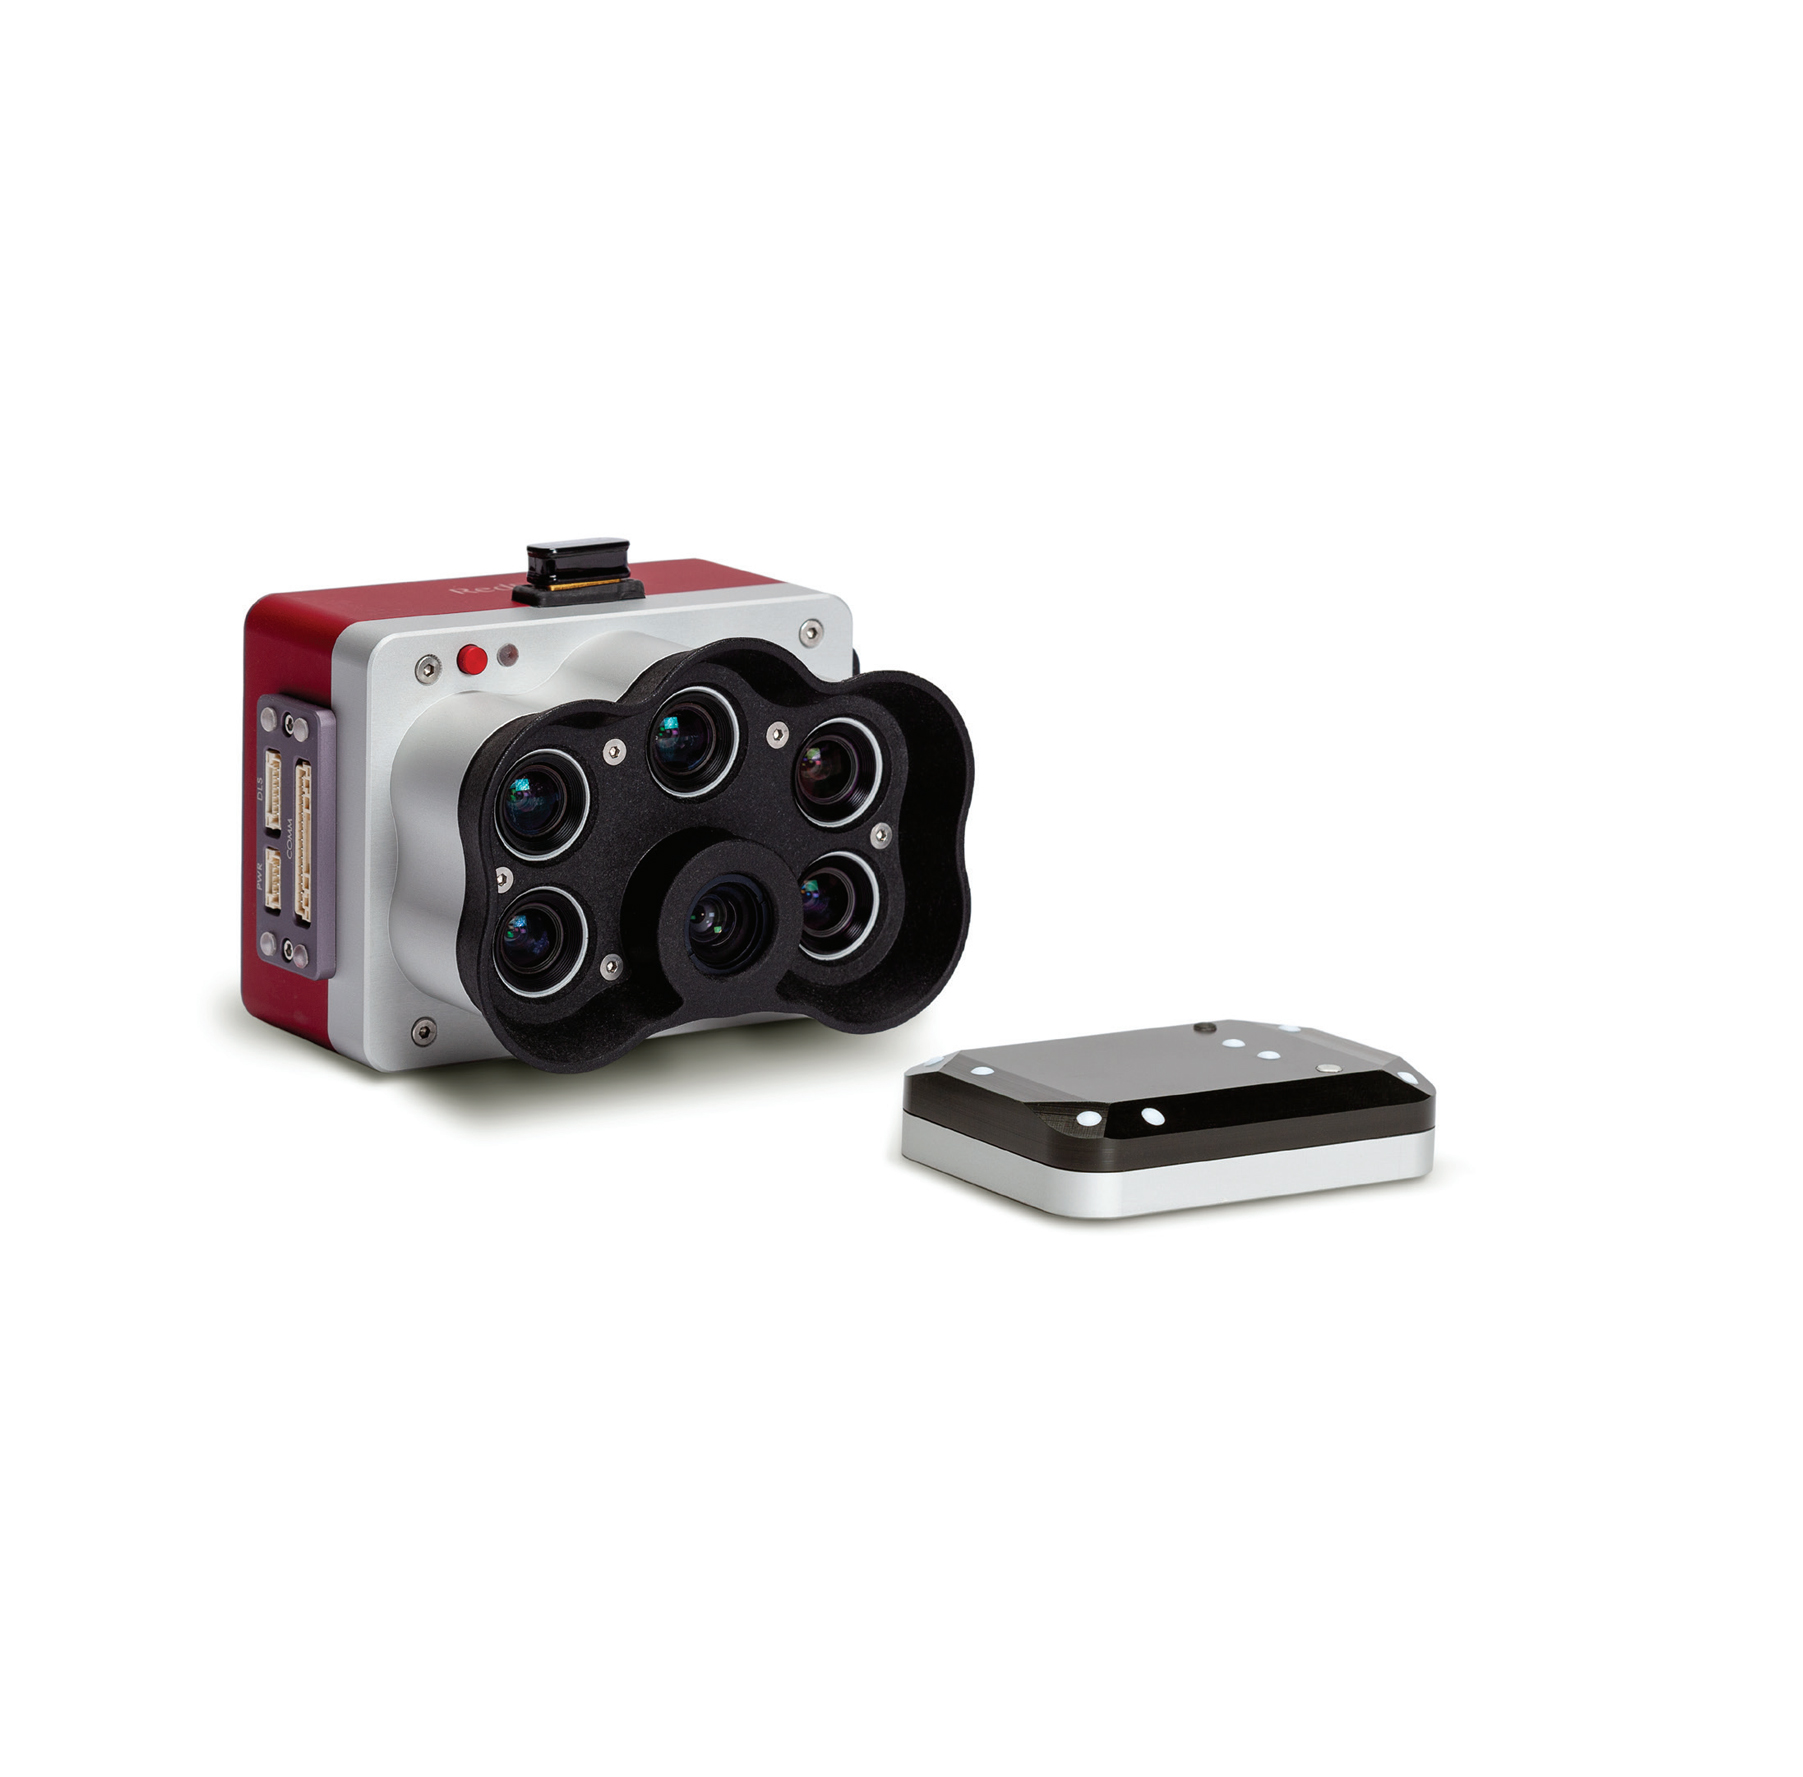 RedEdge-MX升级版RedEdge-P载全色段多光谱相机